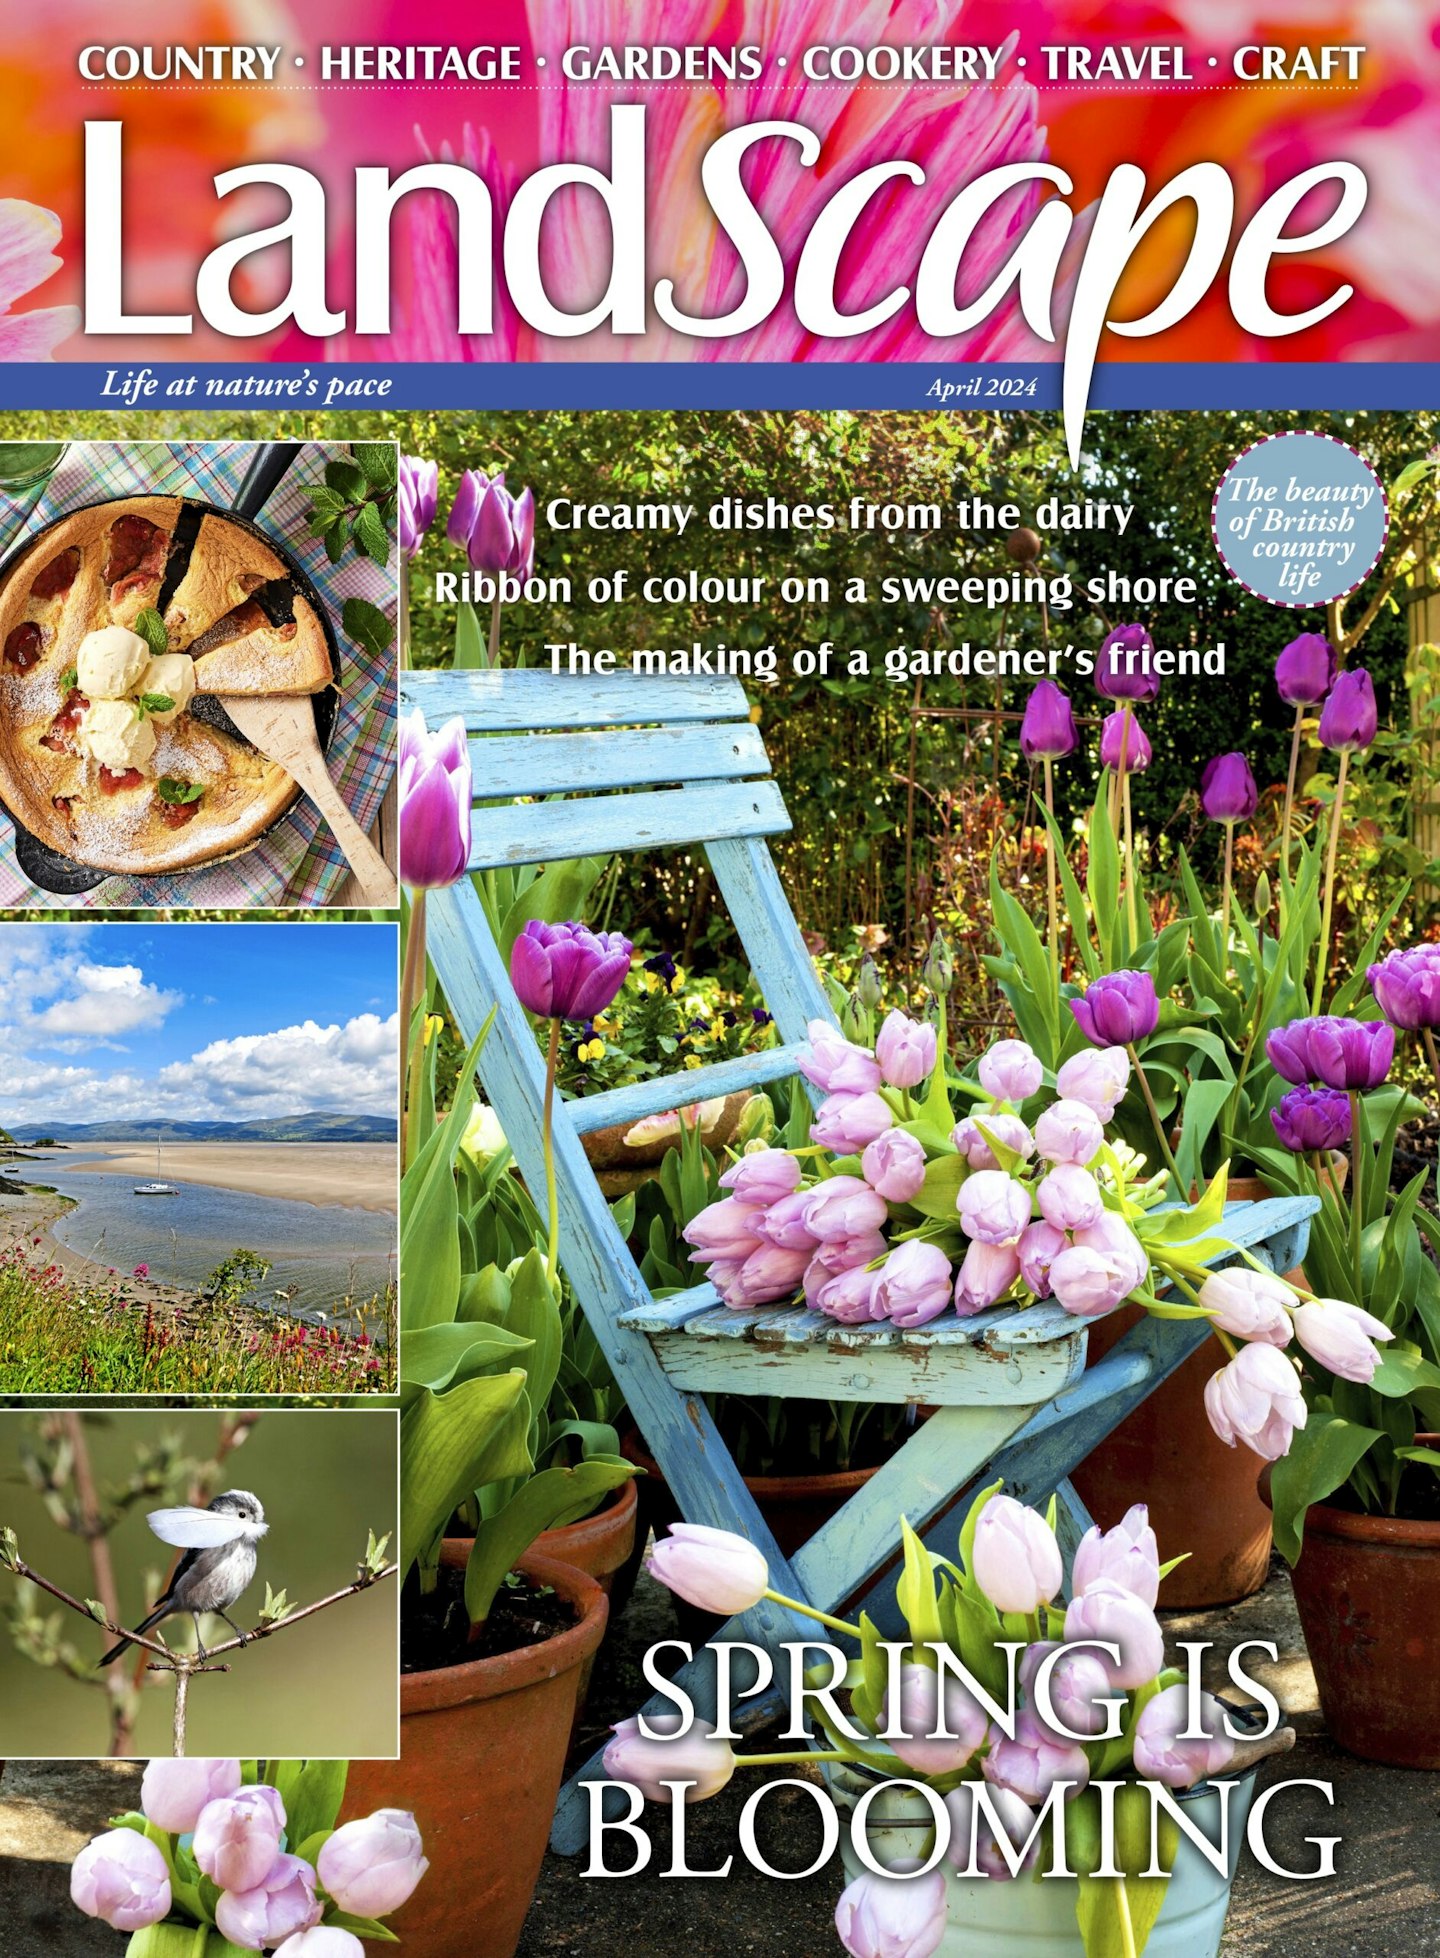 LandScape magazine April 2024 issue